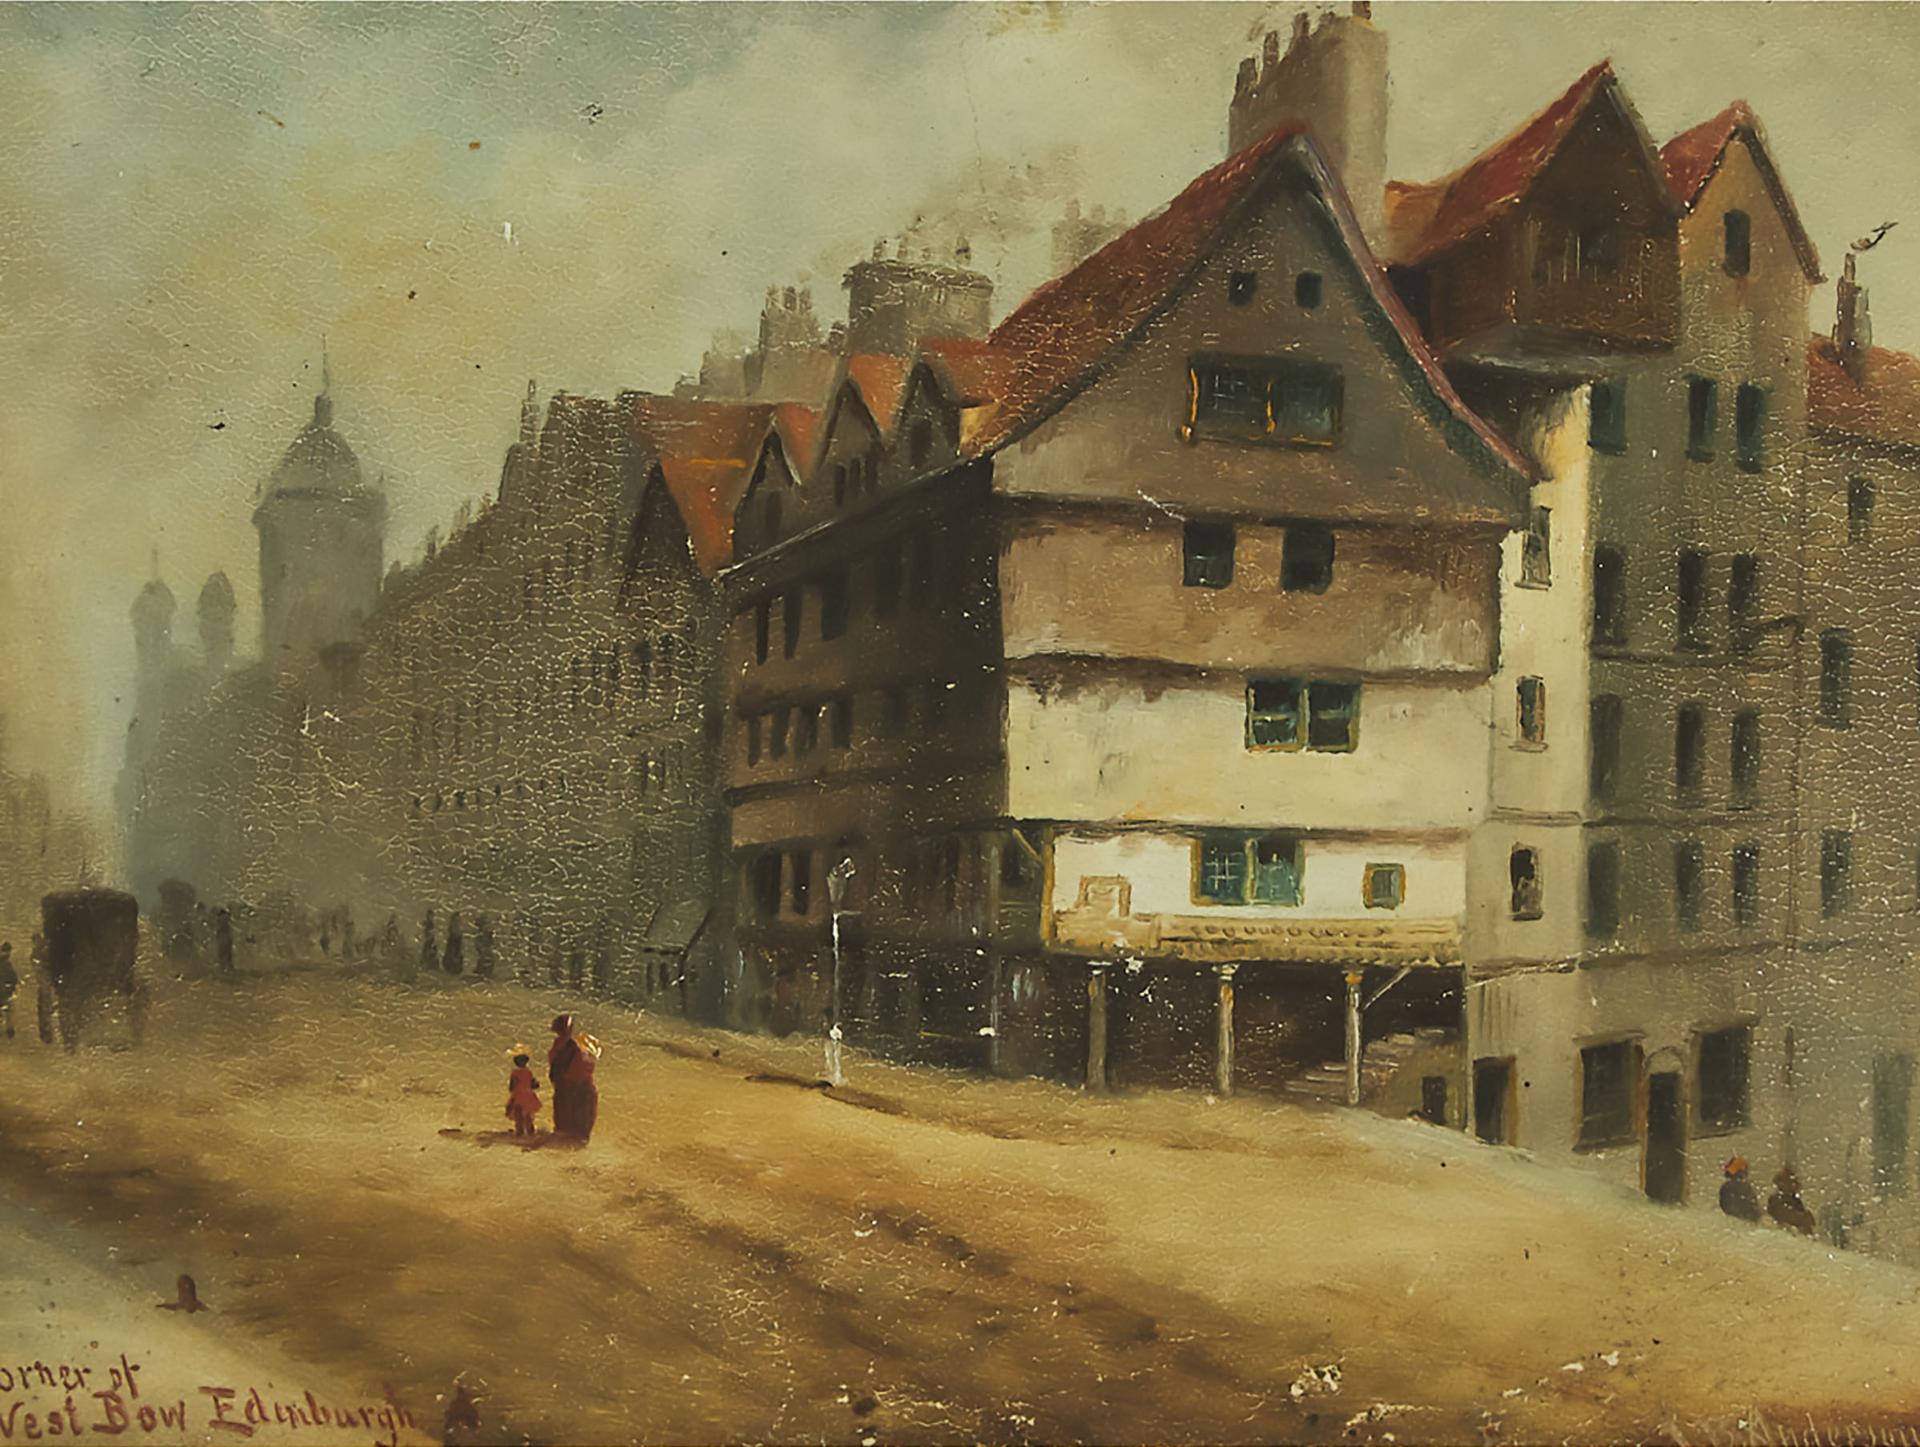 James Bell Anderson (1886-1938) - Corner Of West Bow Edinburgh